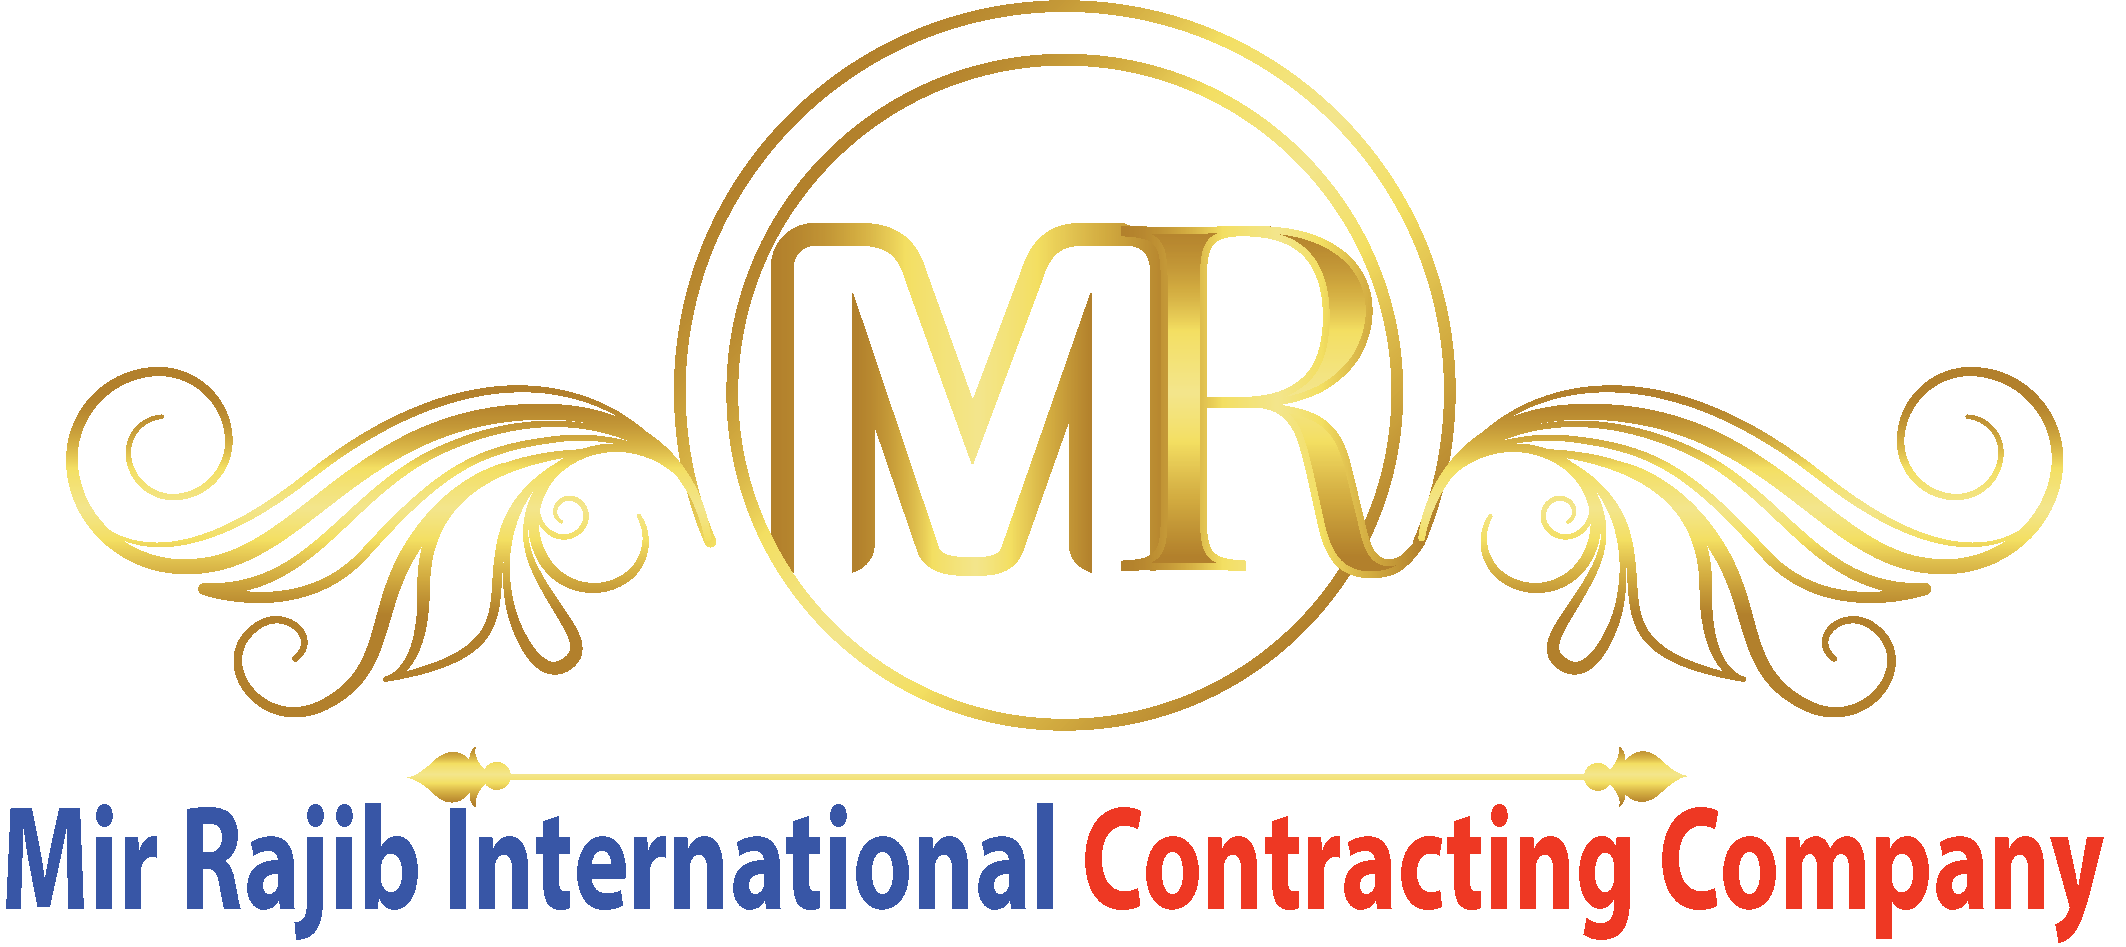 Mir Rajib International Contracting Company